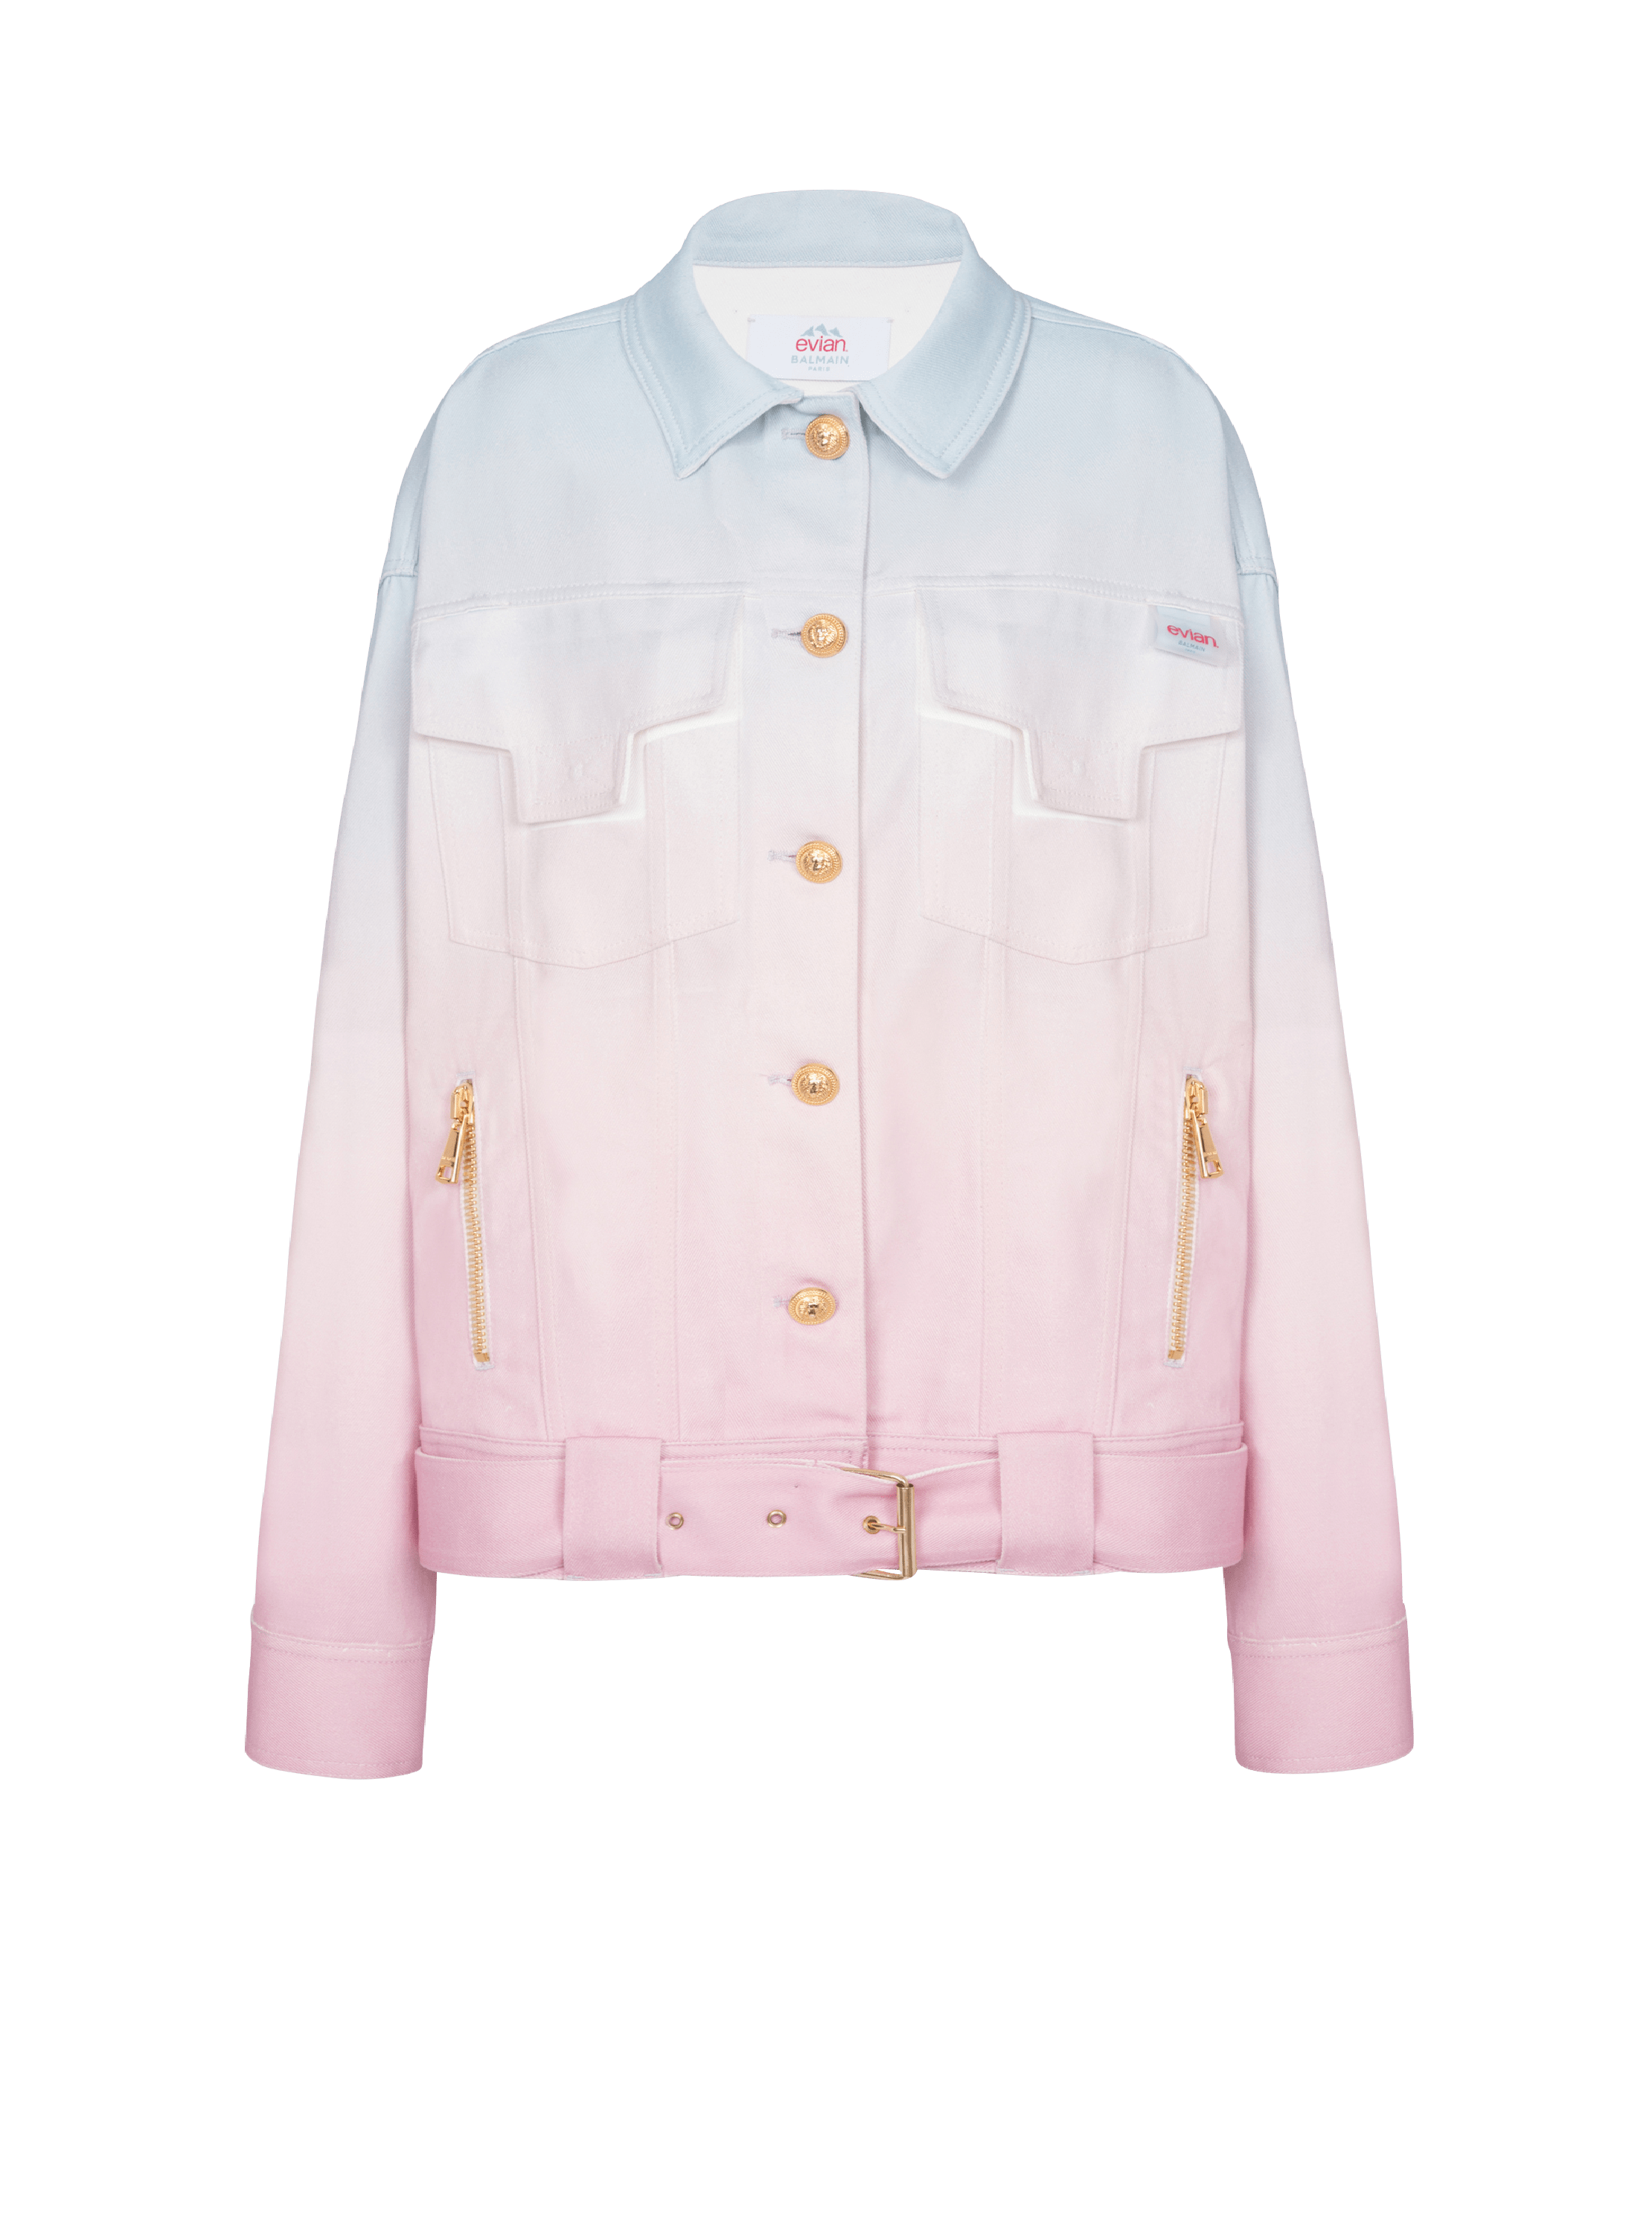 Balmain x Evian - Oversized jacket